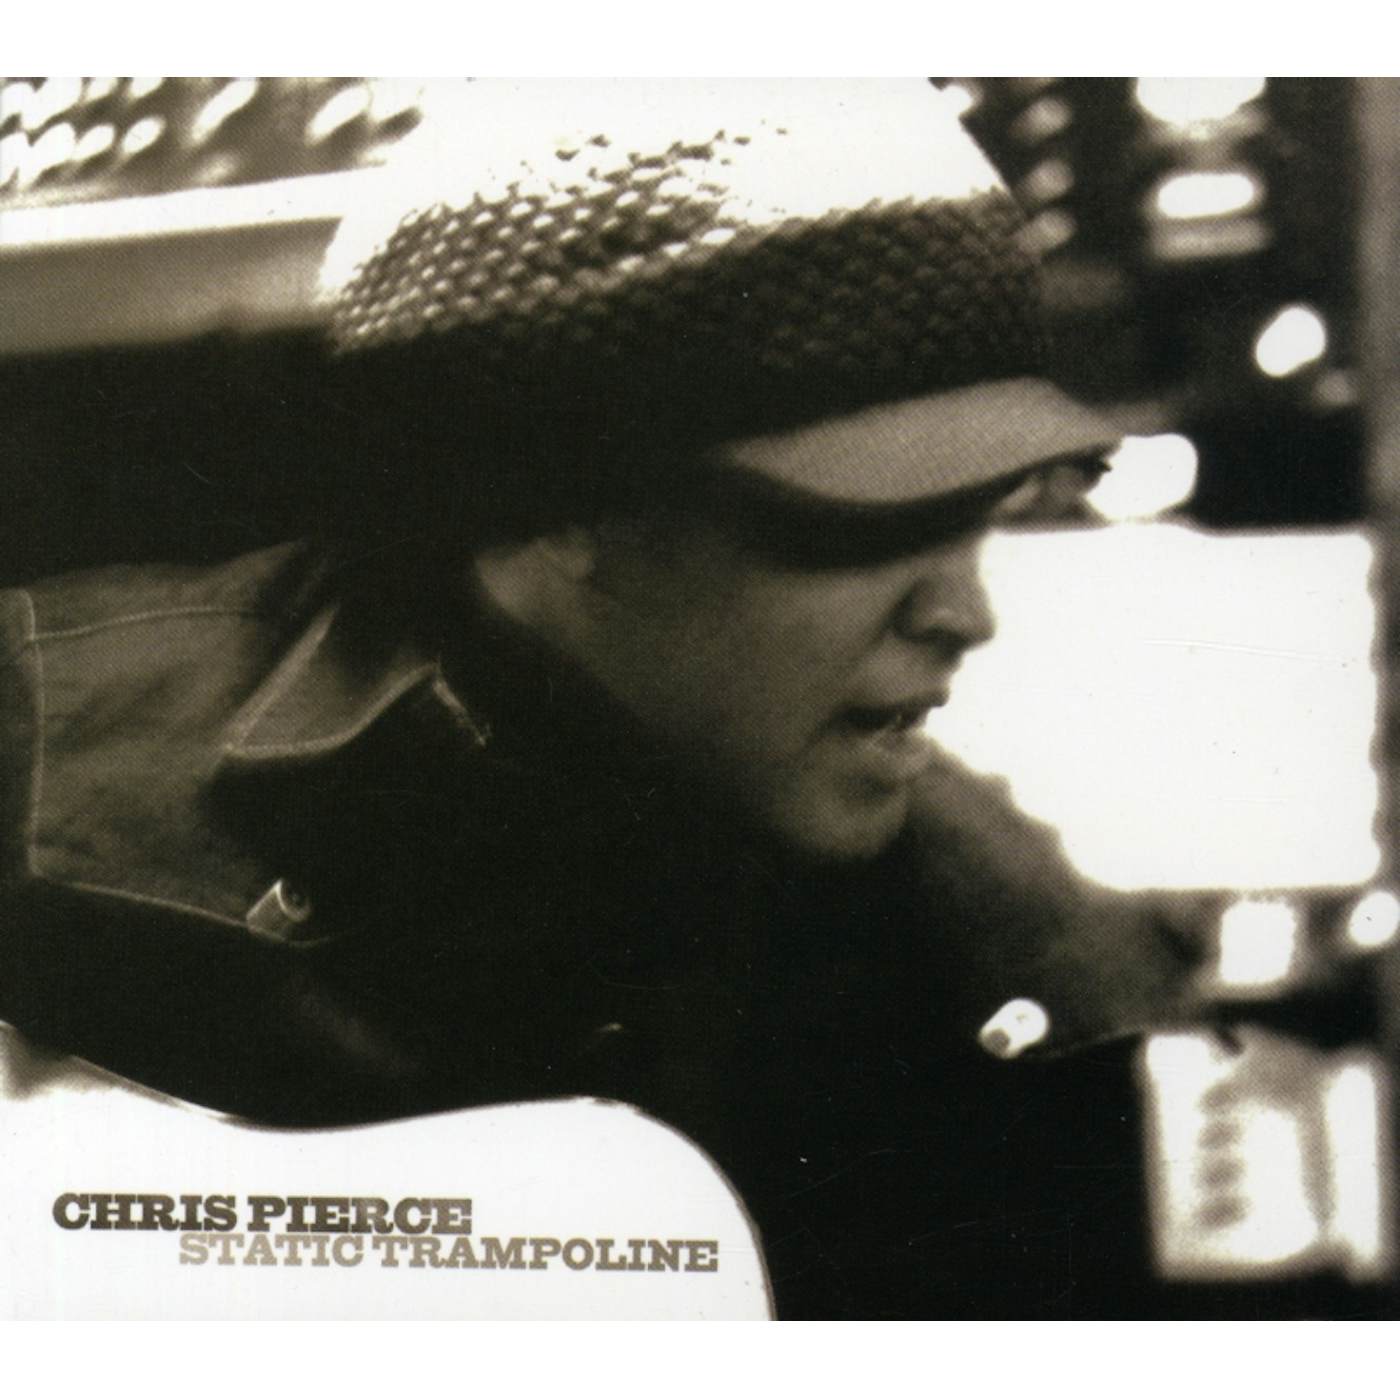 Chris Pierce STATIC TRAMPOLINE CD